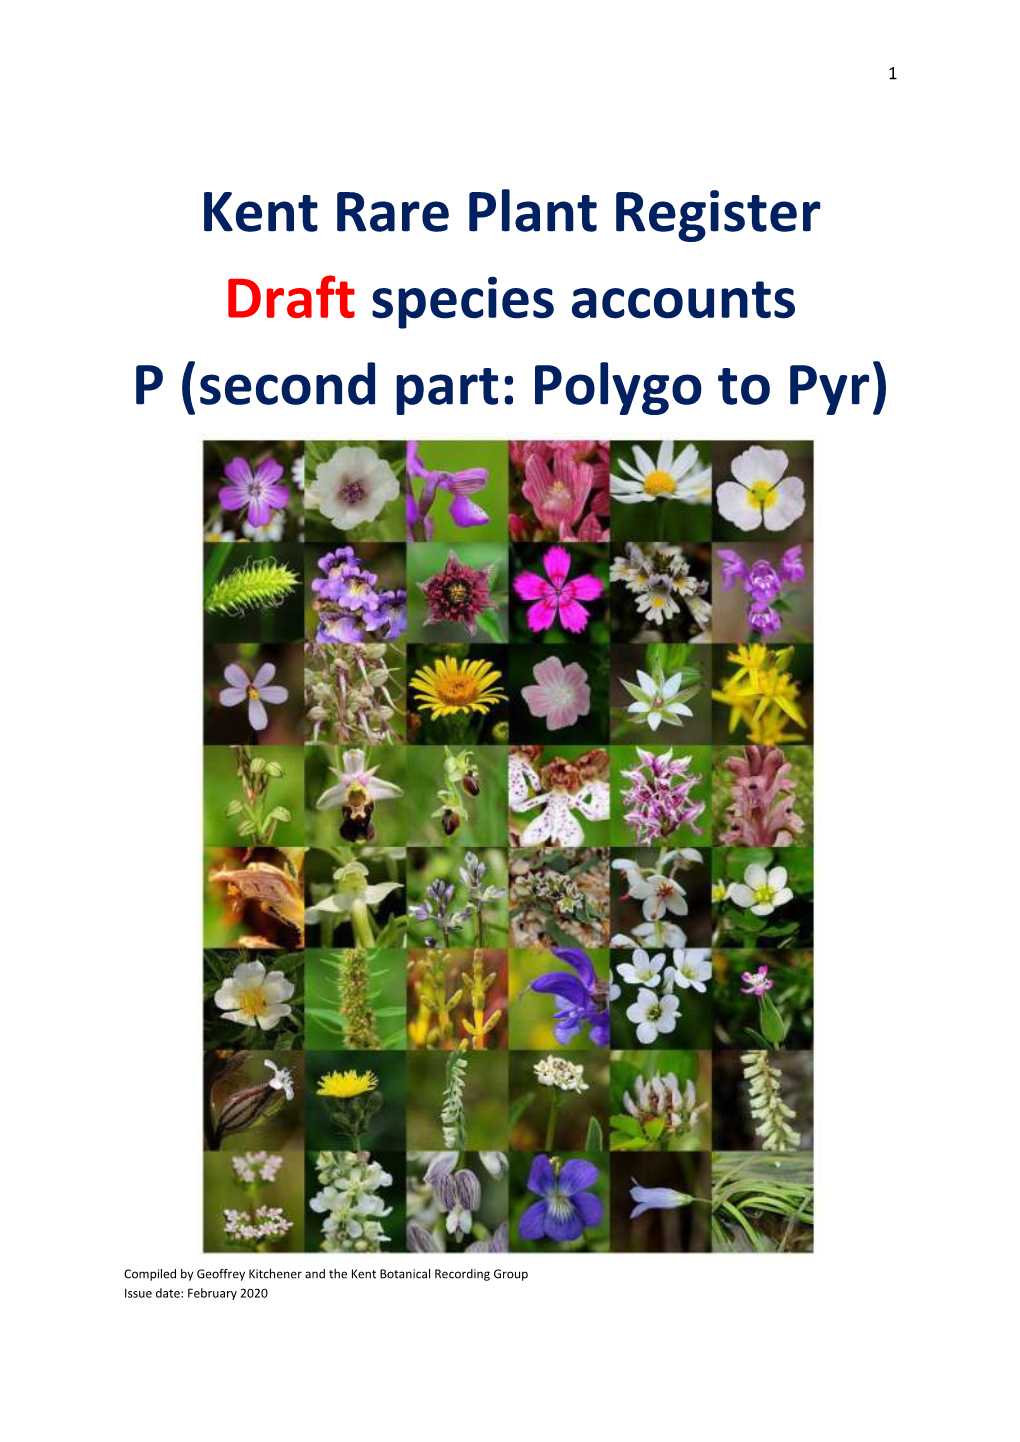 Kent Rare Plant Register Draft Species Accounts P (Second Part: Polygo to Pyr)